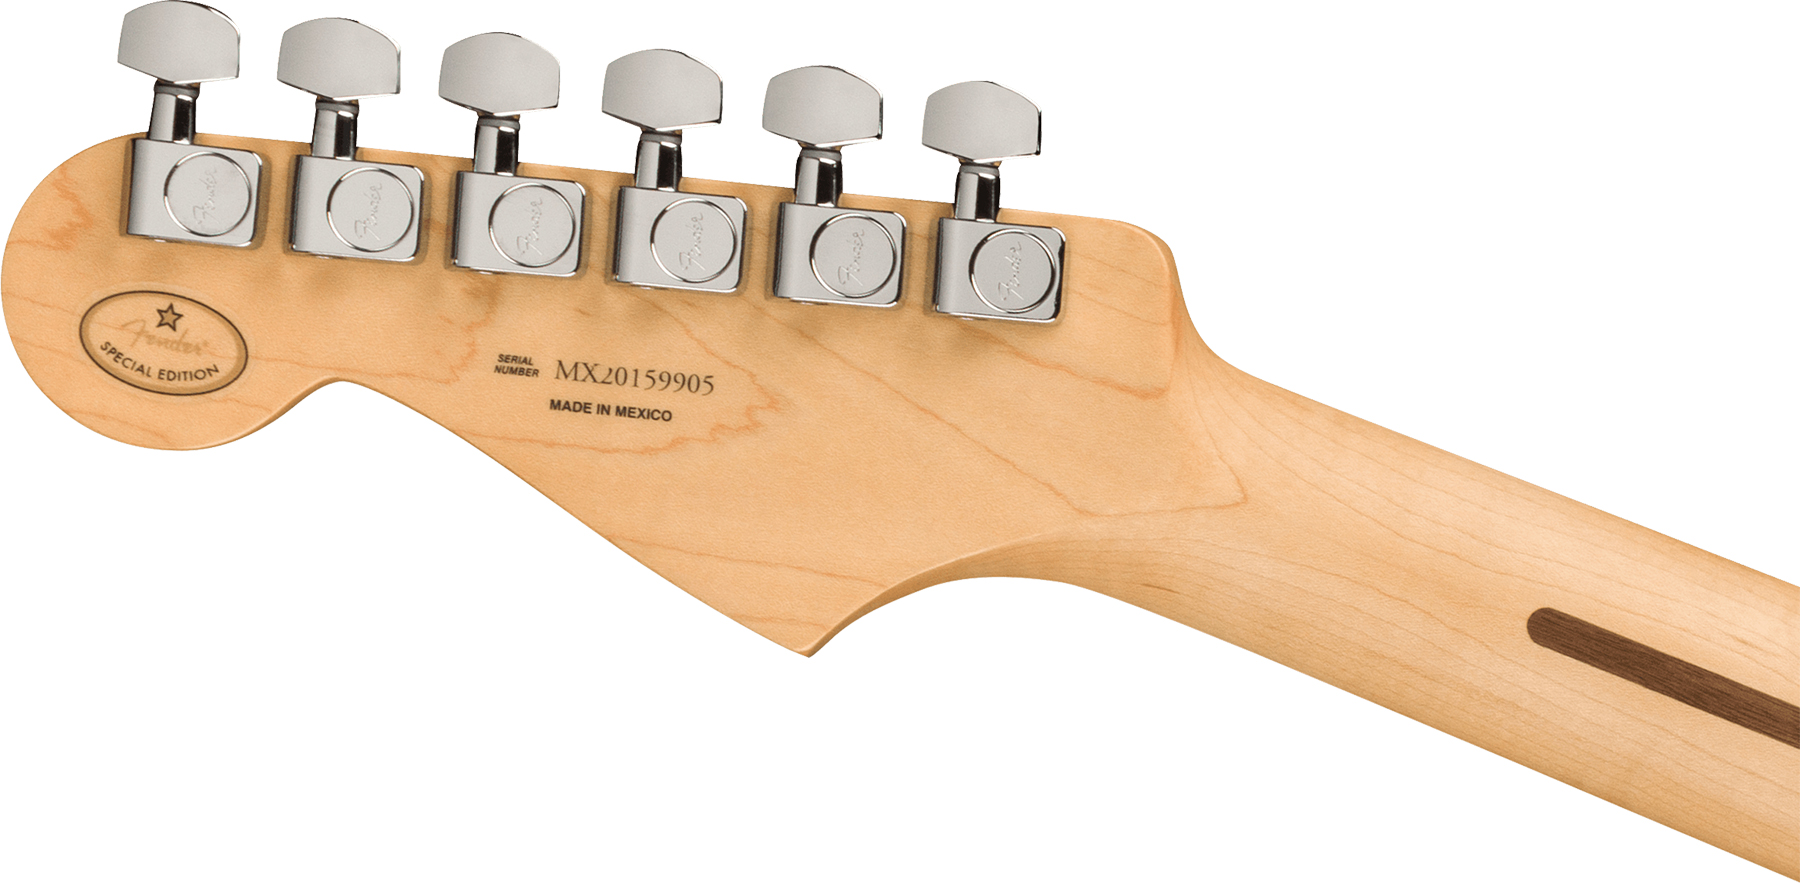 Fender Strat Player Ltd Mex 3s Trem Mn - Pacific Peach - Guitarra eléctrica con forma de str. - Variation 3